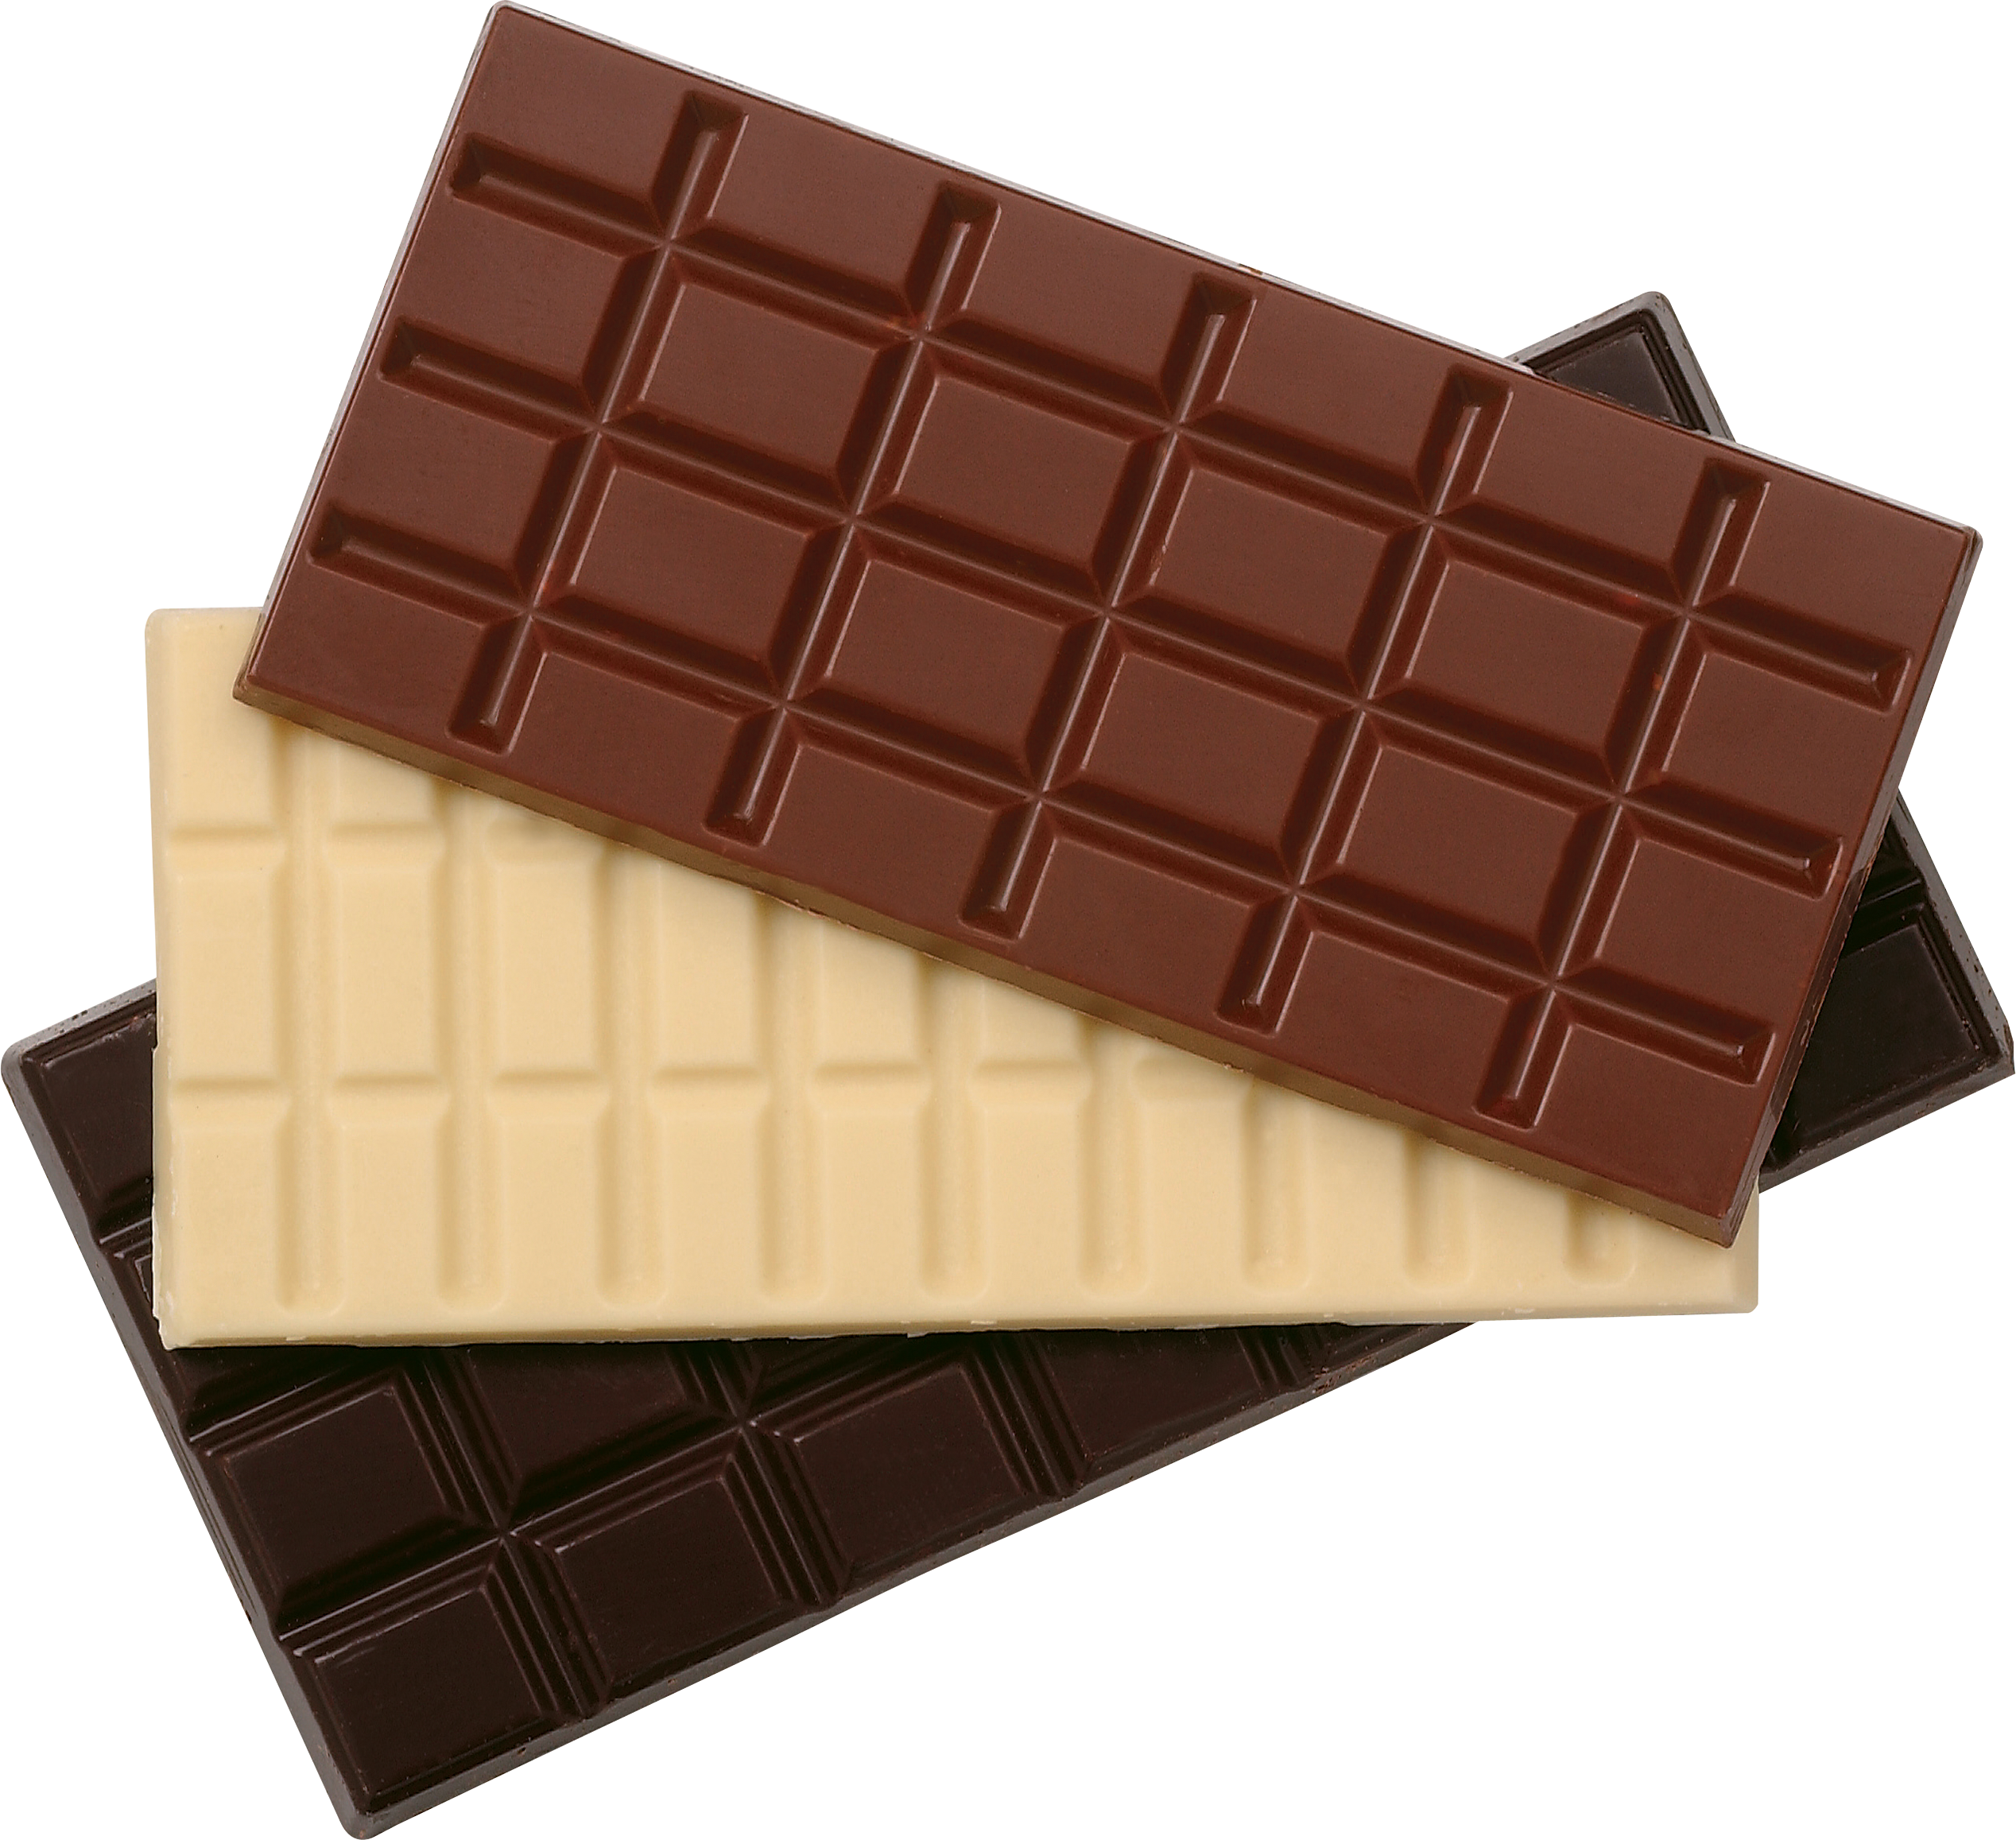 Chocolate Bars Png Image - Chocolate Bars Png (2536x2314)